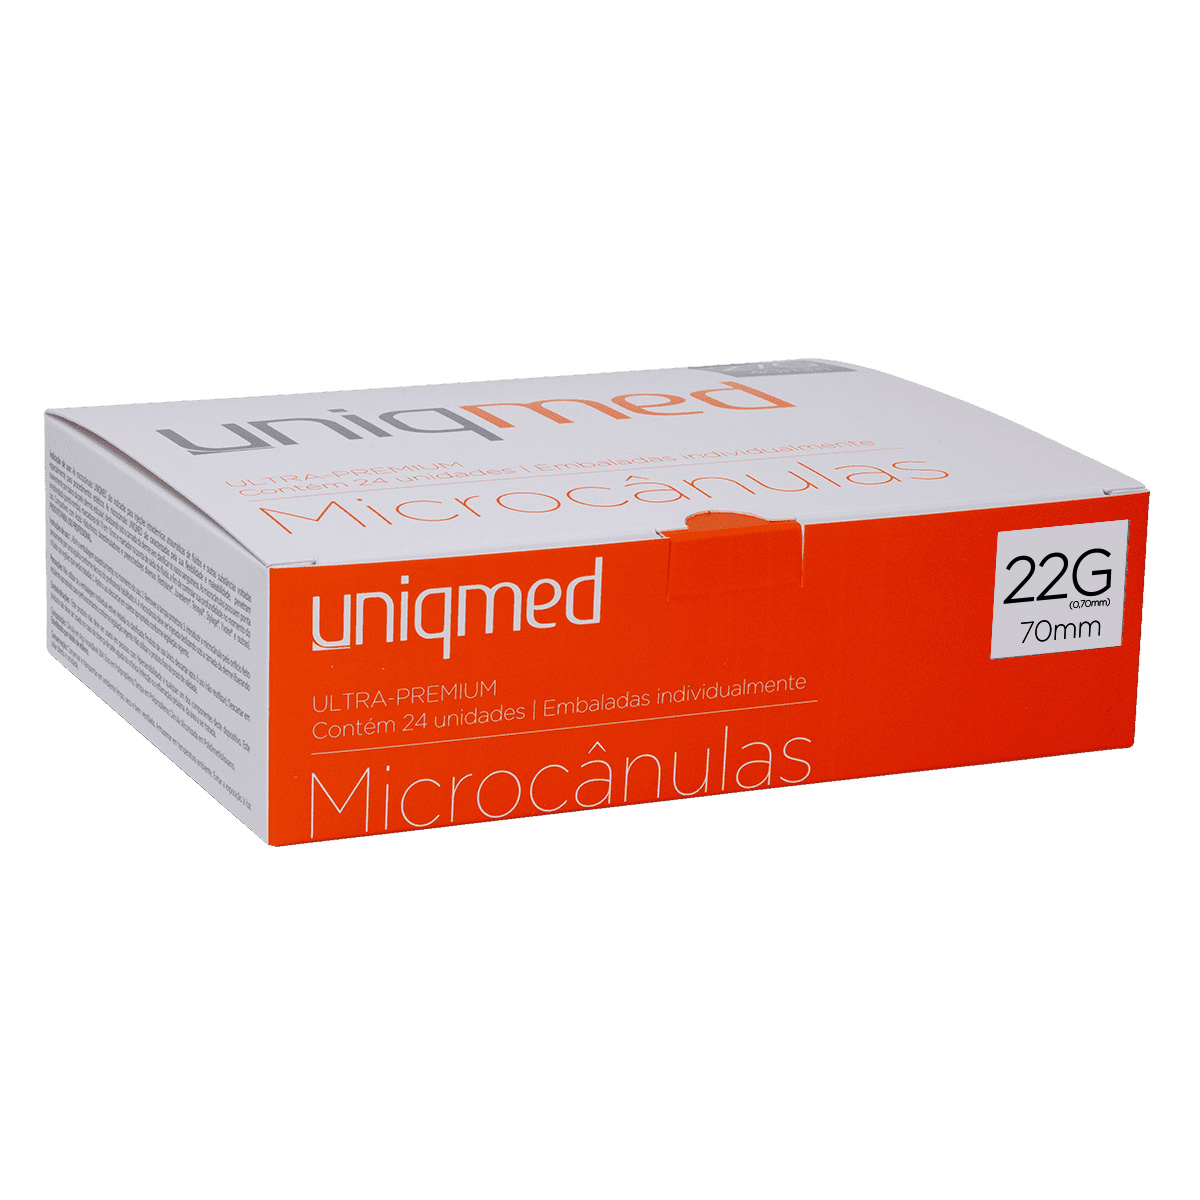 Microcânulas Uniqmed - 22G (0.70mm) x 70mm - Caixa com 24 unidades